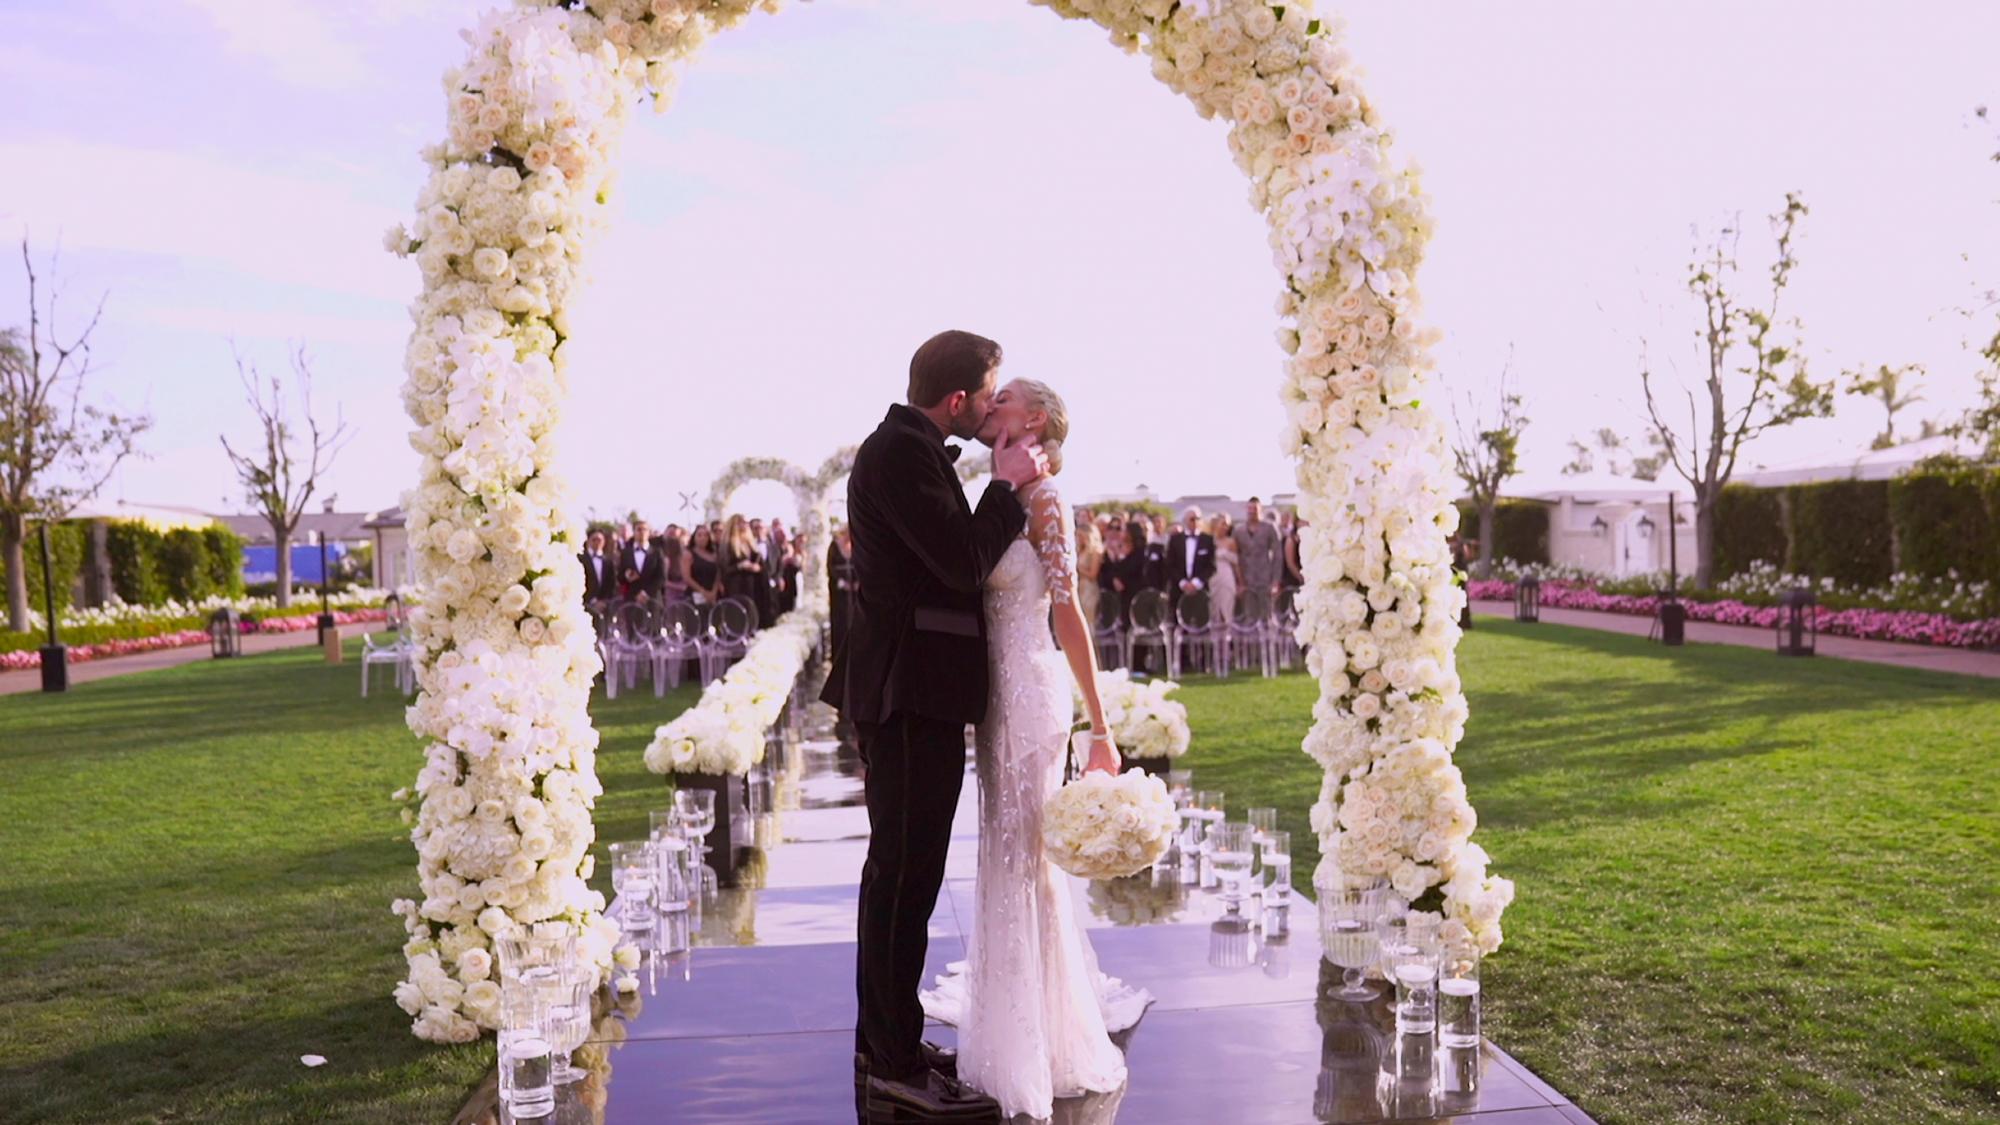 Tarek and Heather get married in Season 5 of Selling Sunset.